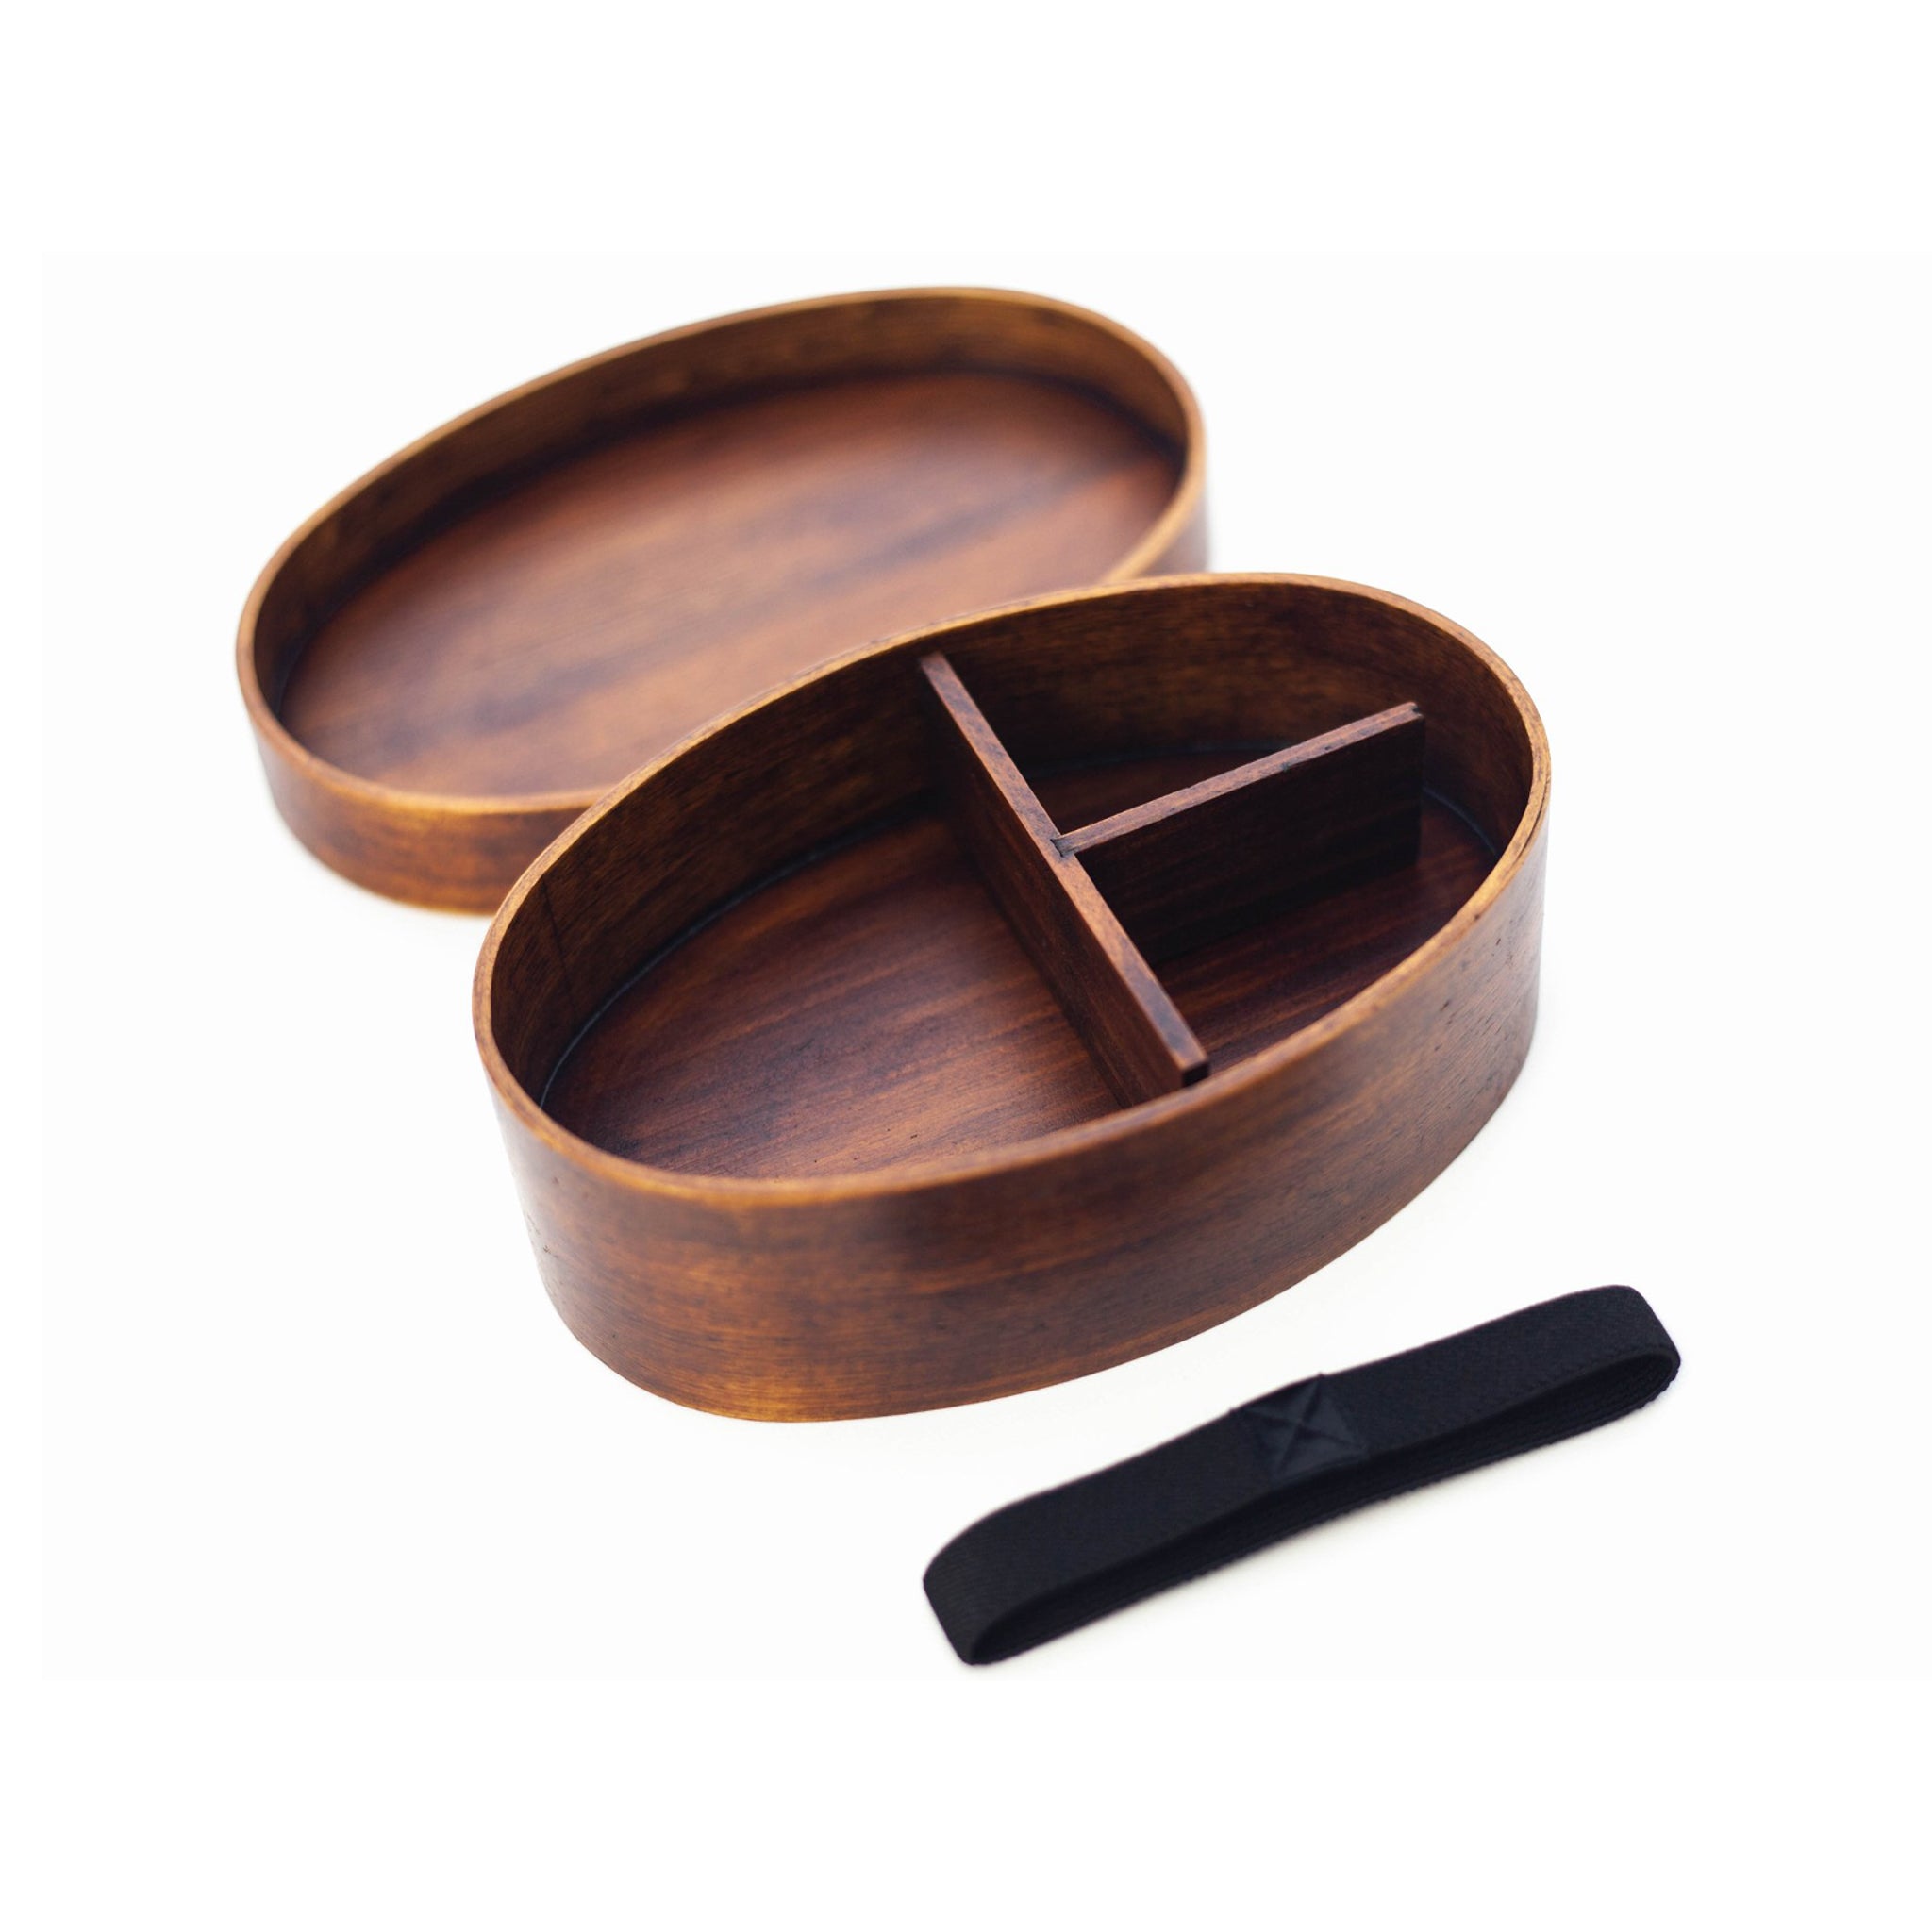 Small Wooden Bento Box, 480ml